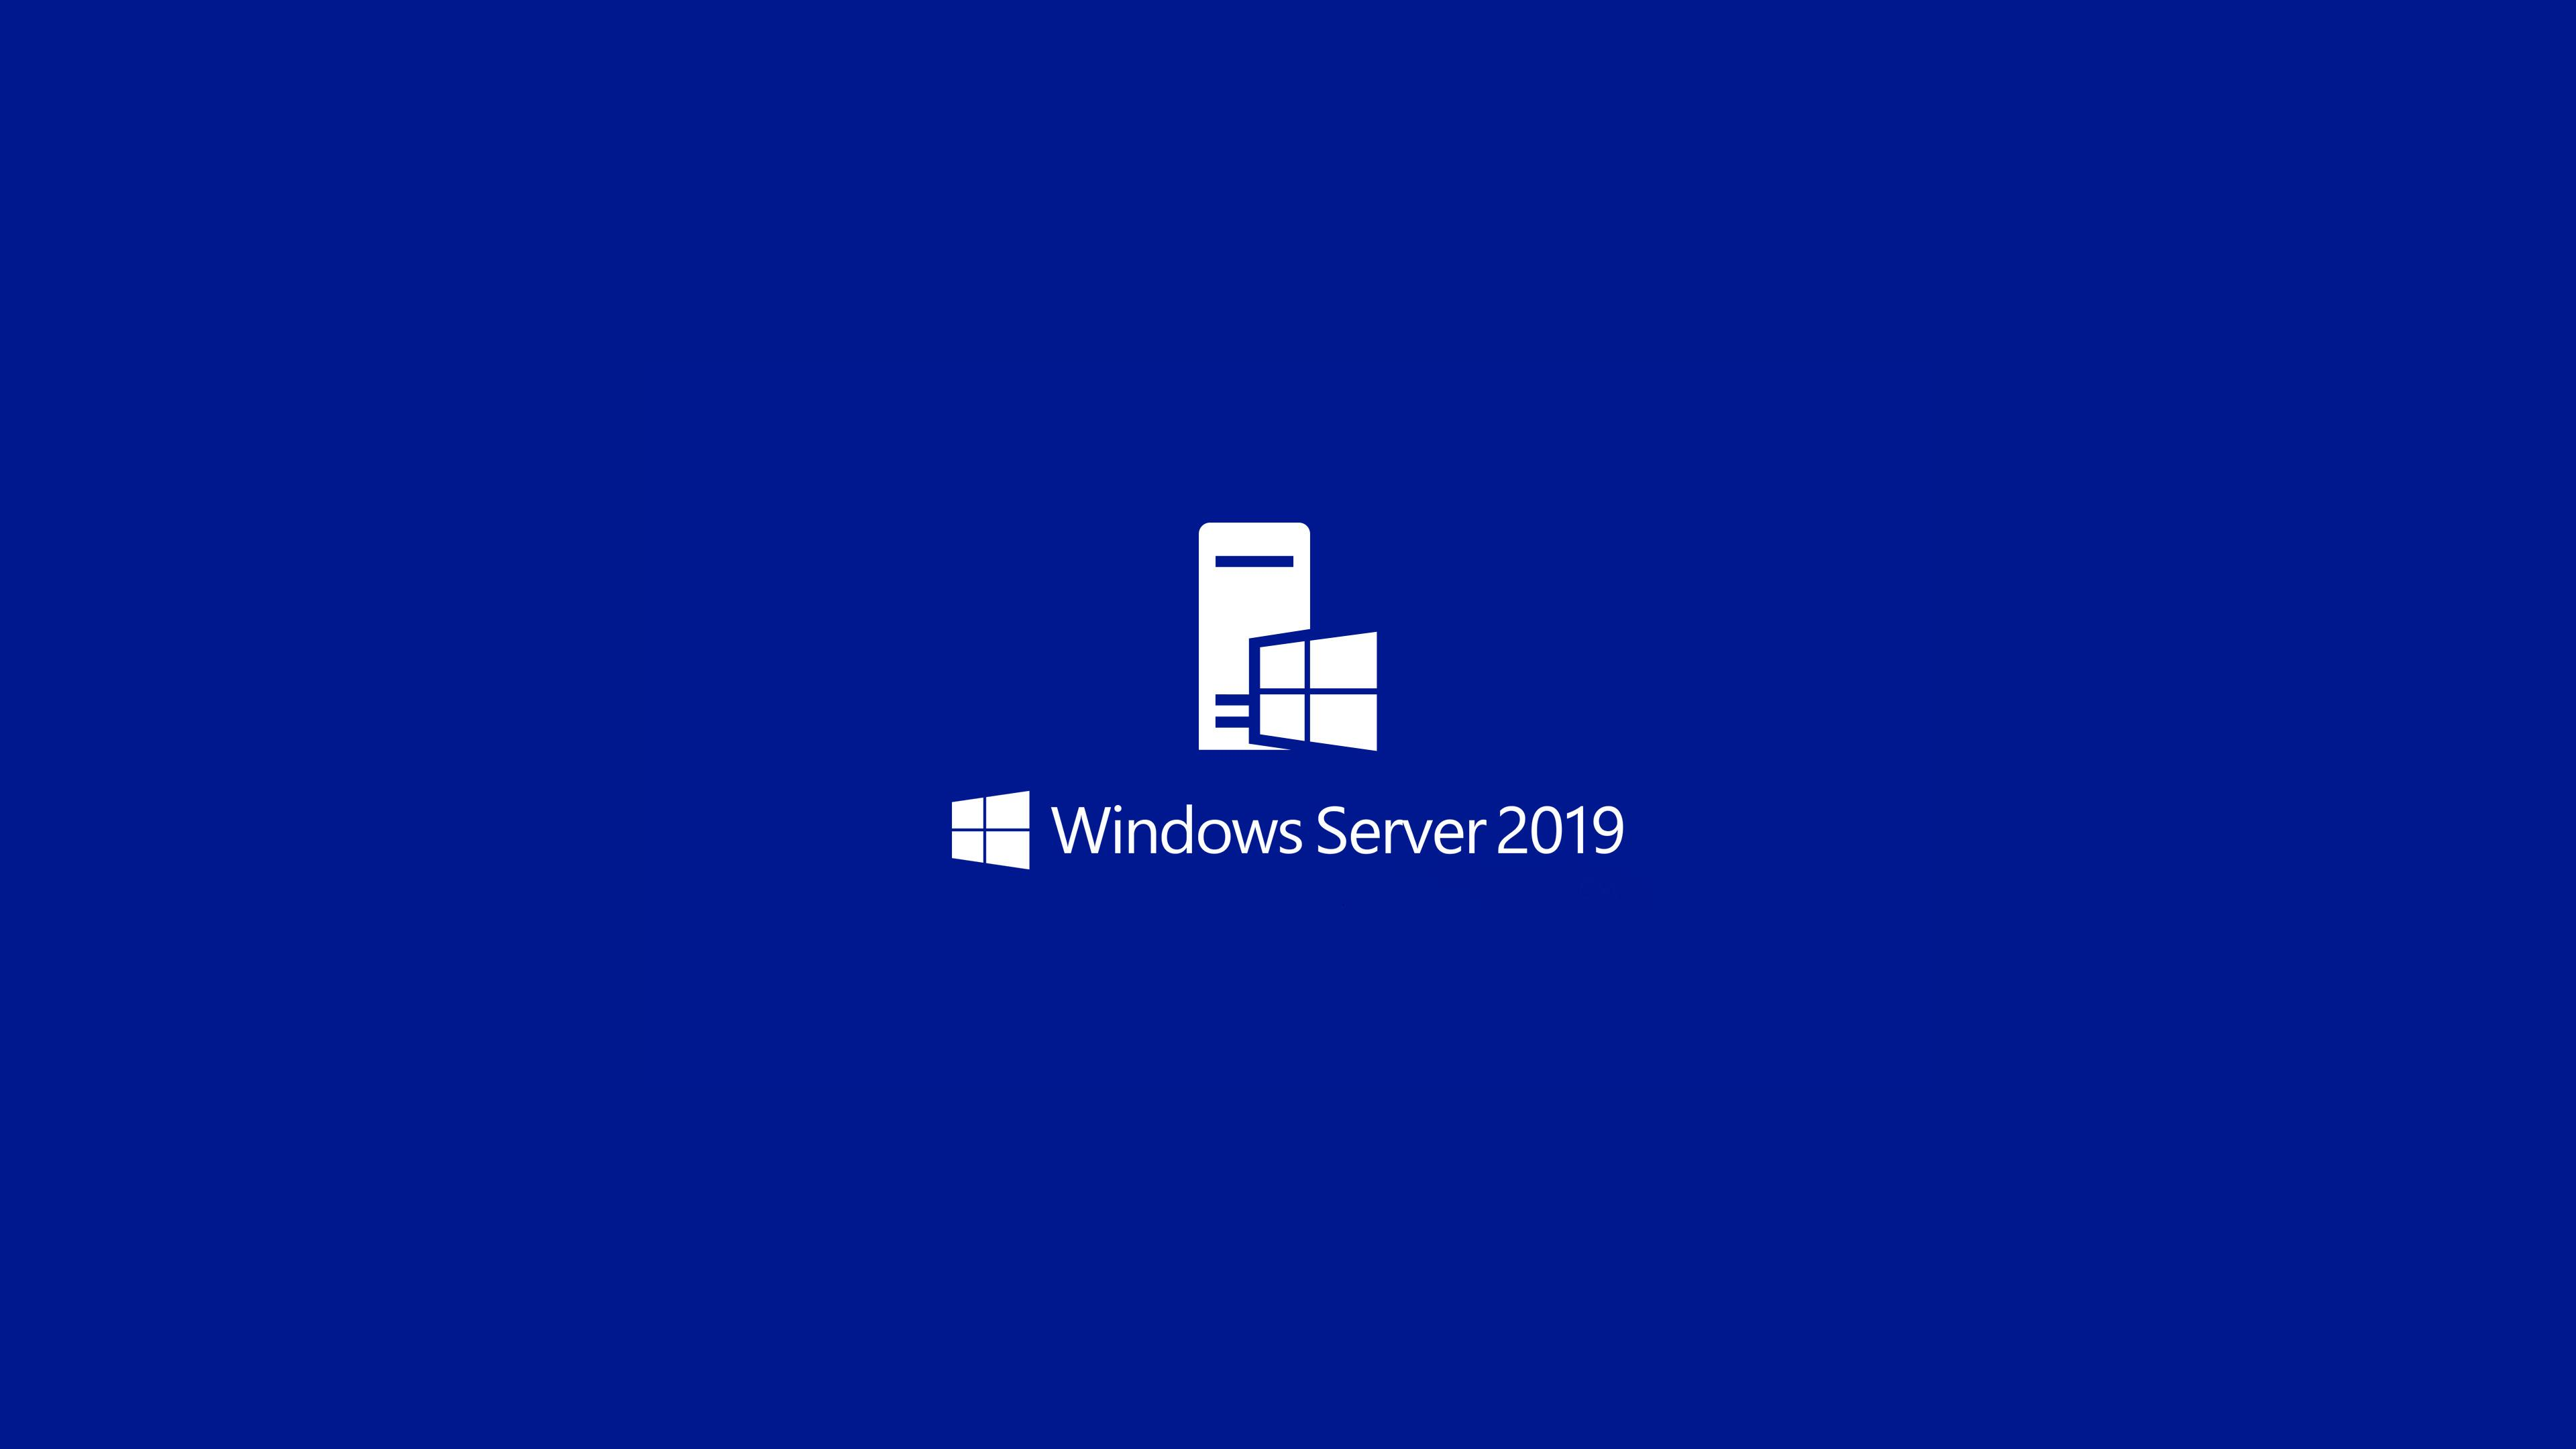 General 3840x2160 Windows Server Microsoft operating system Microsoft Windows technology blue background simple background logo